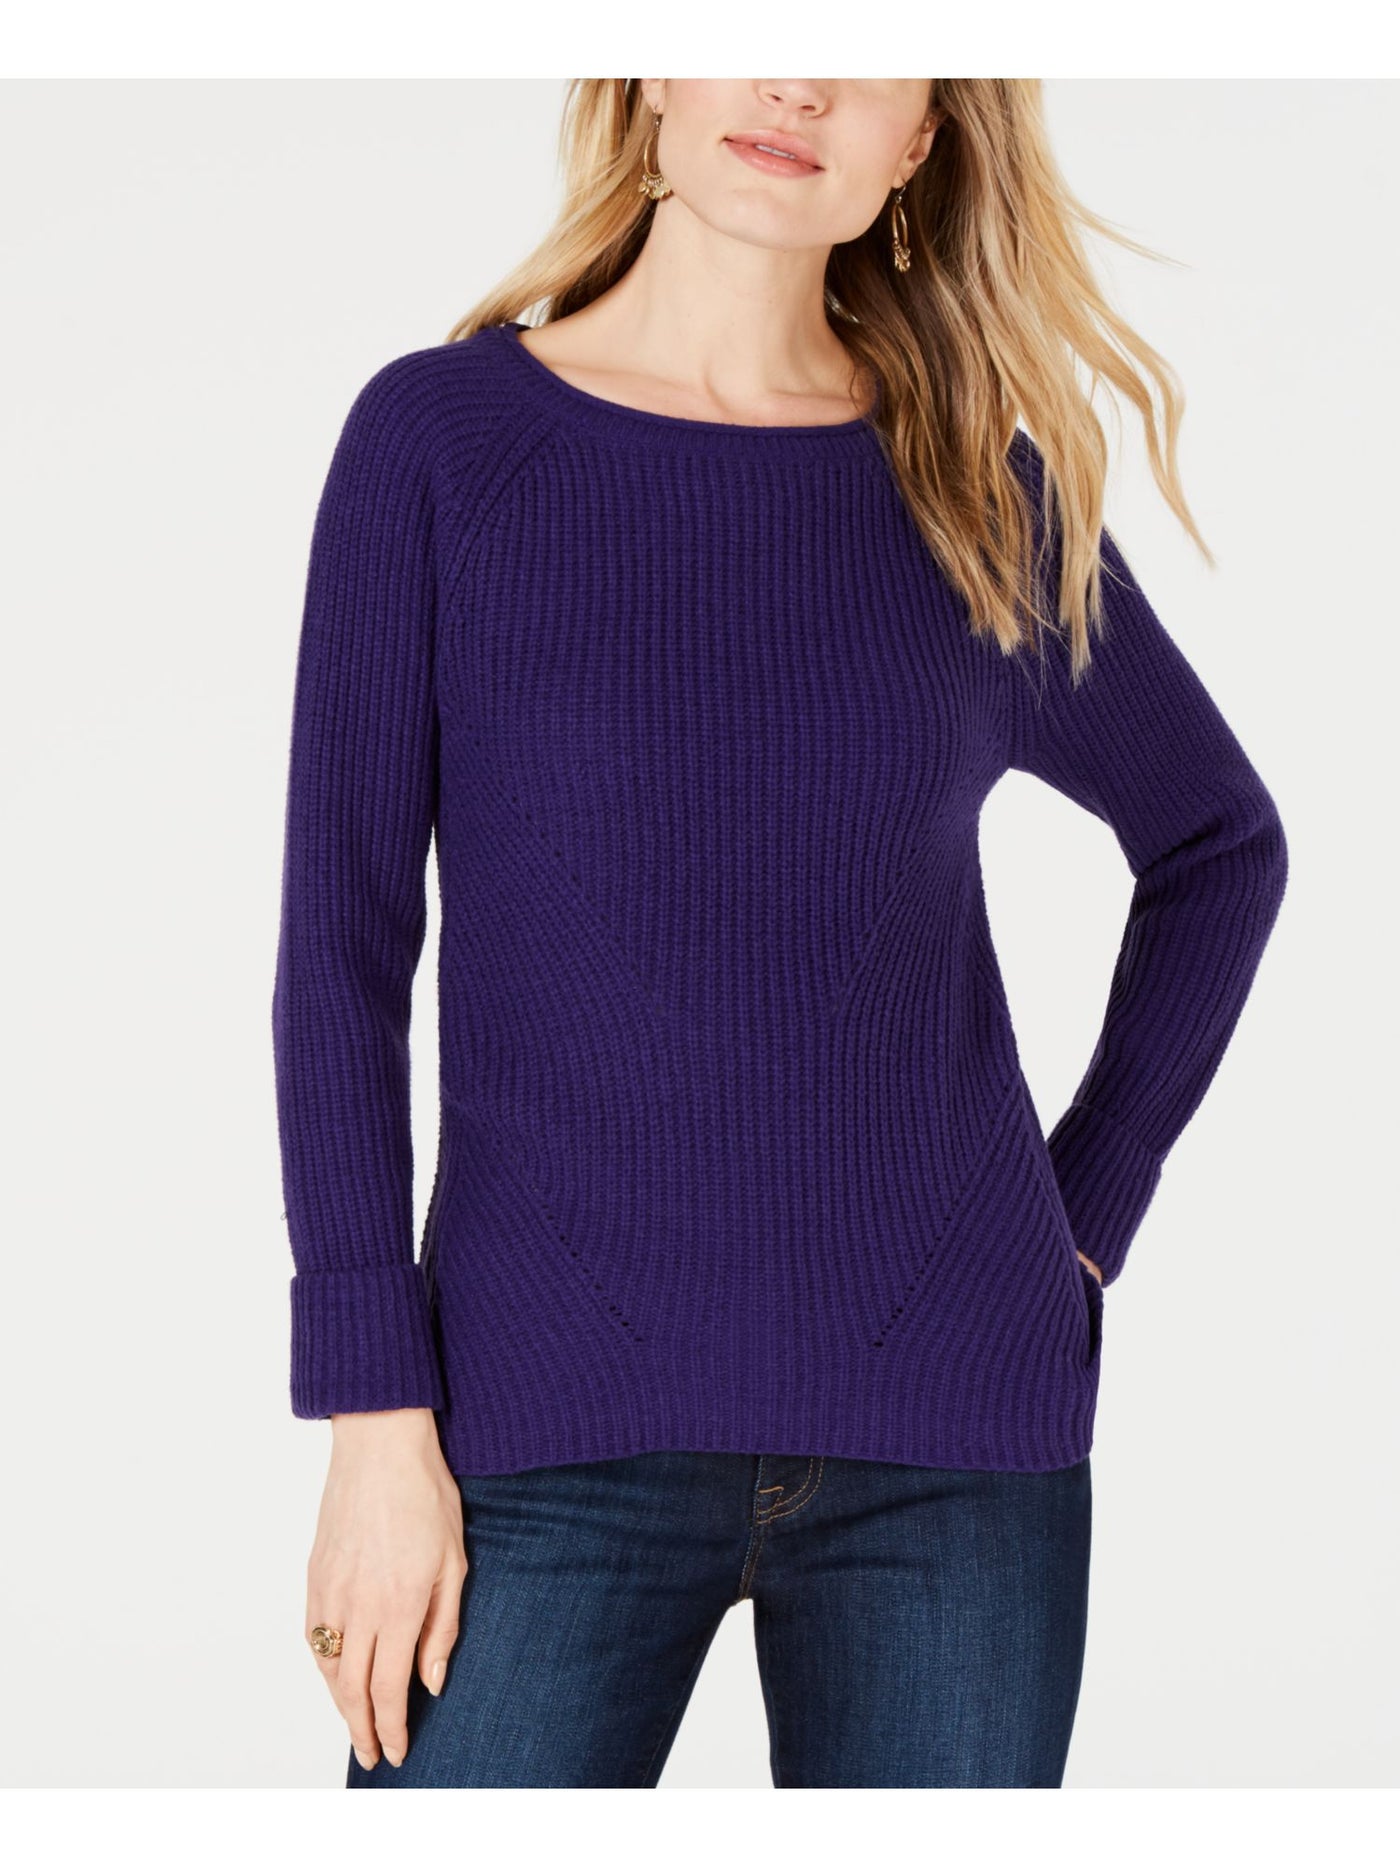 STYLE & COMPANY Womens Textured Long Sleeve Jewel Neck Sweater